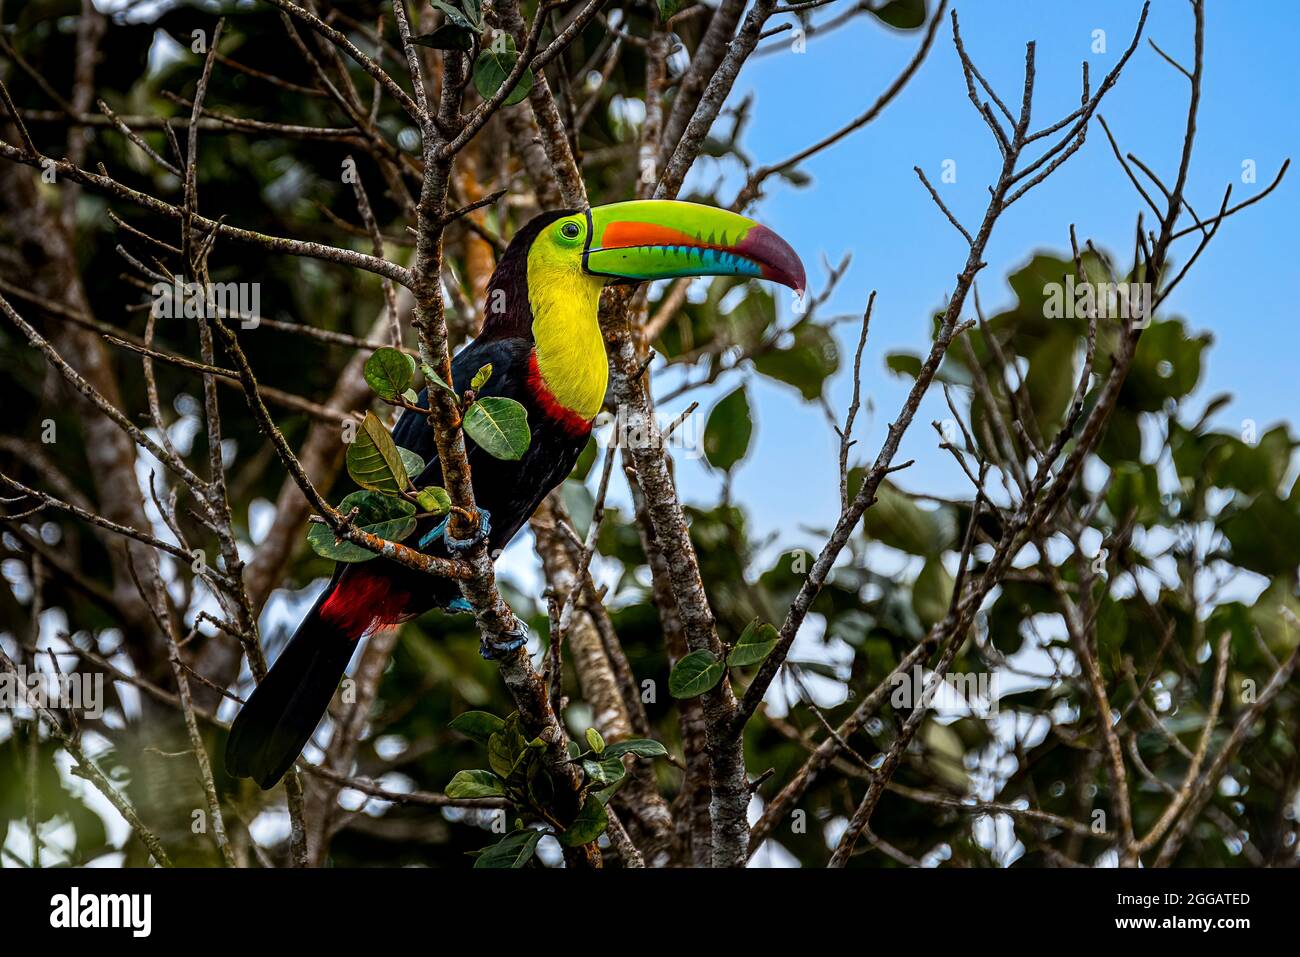 Keel-billed toucan (Ramphastos sulfuratus) images taken in Panamas rain forest Stock Photo